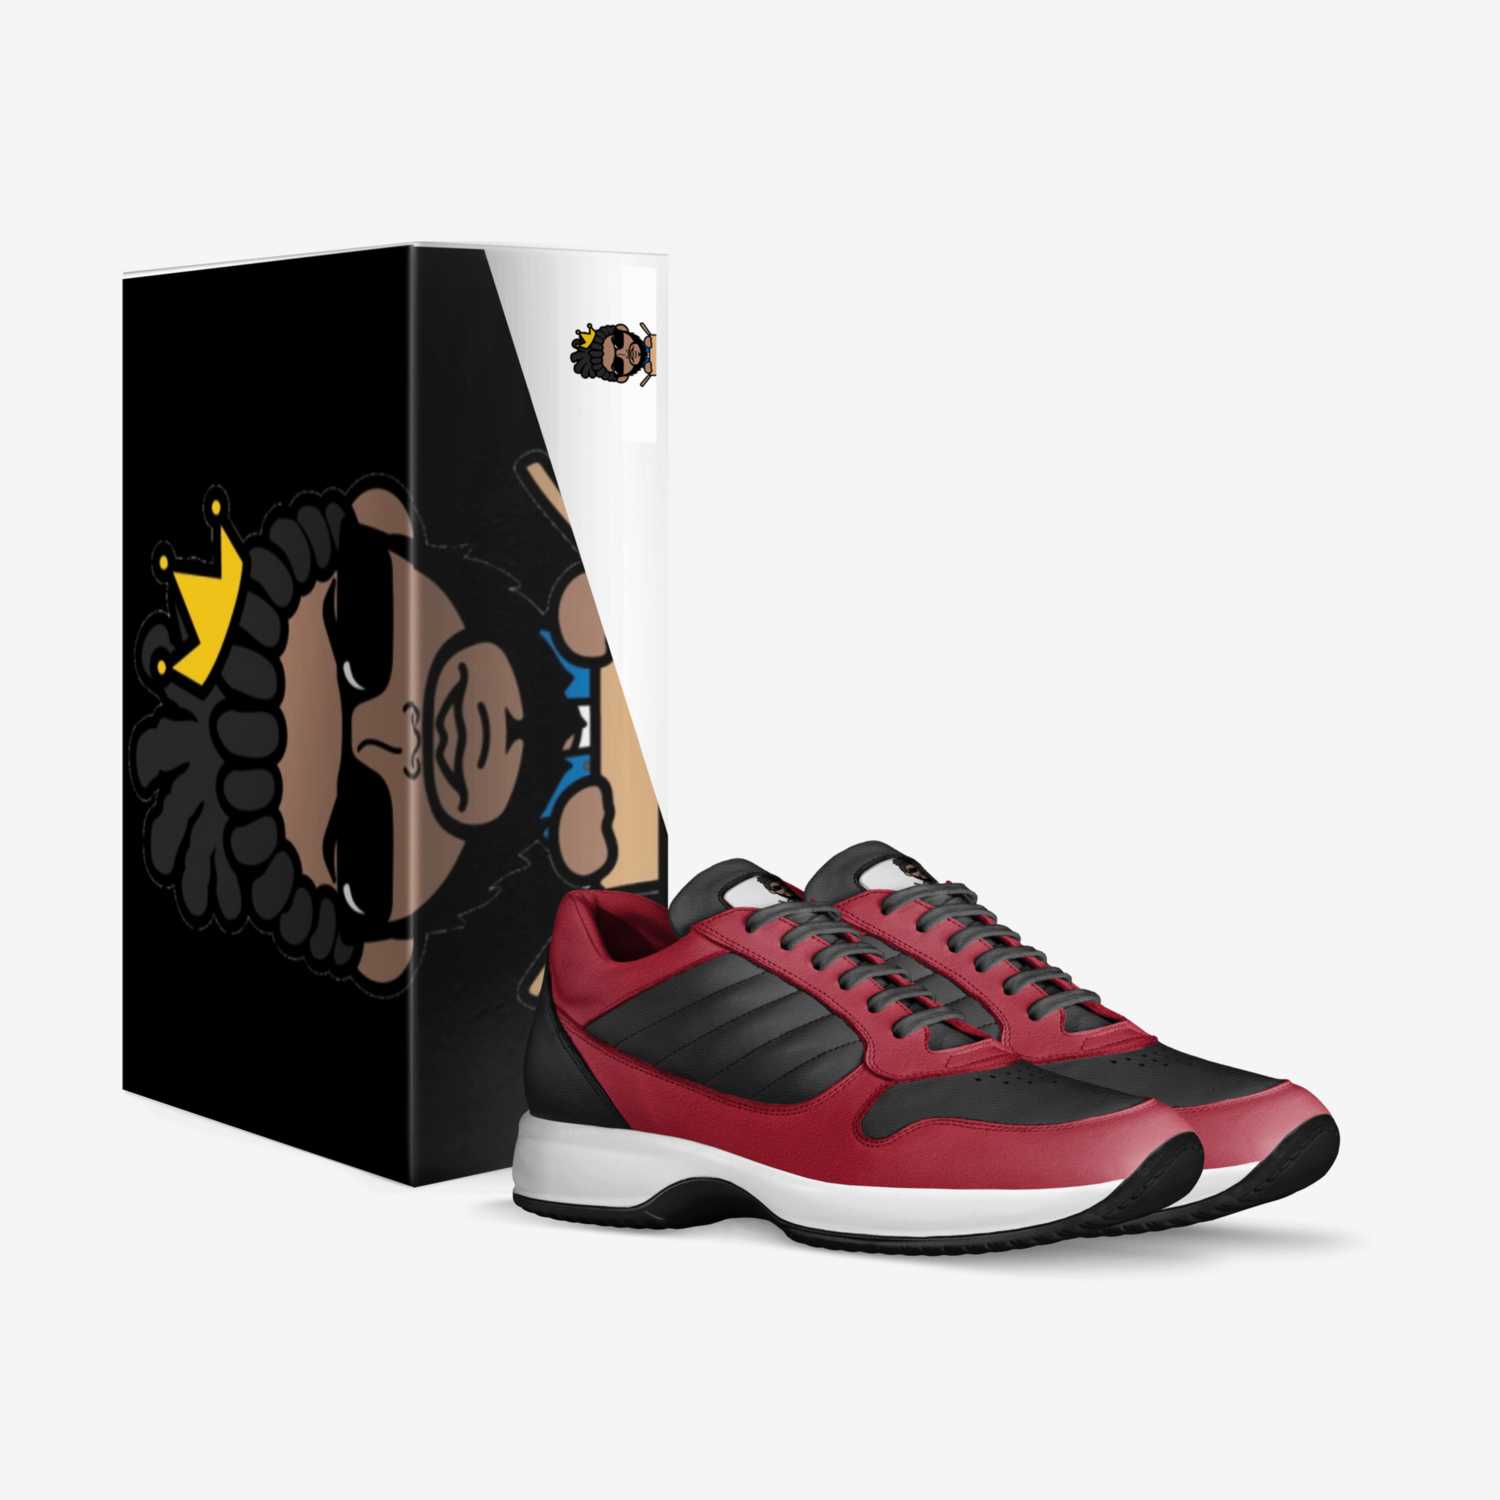 Mr.Inbox Ya Girl custom made in Italy shoes by Brandon Boone | Box view